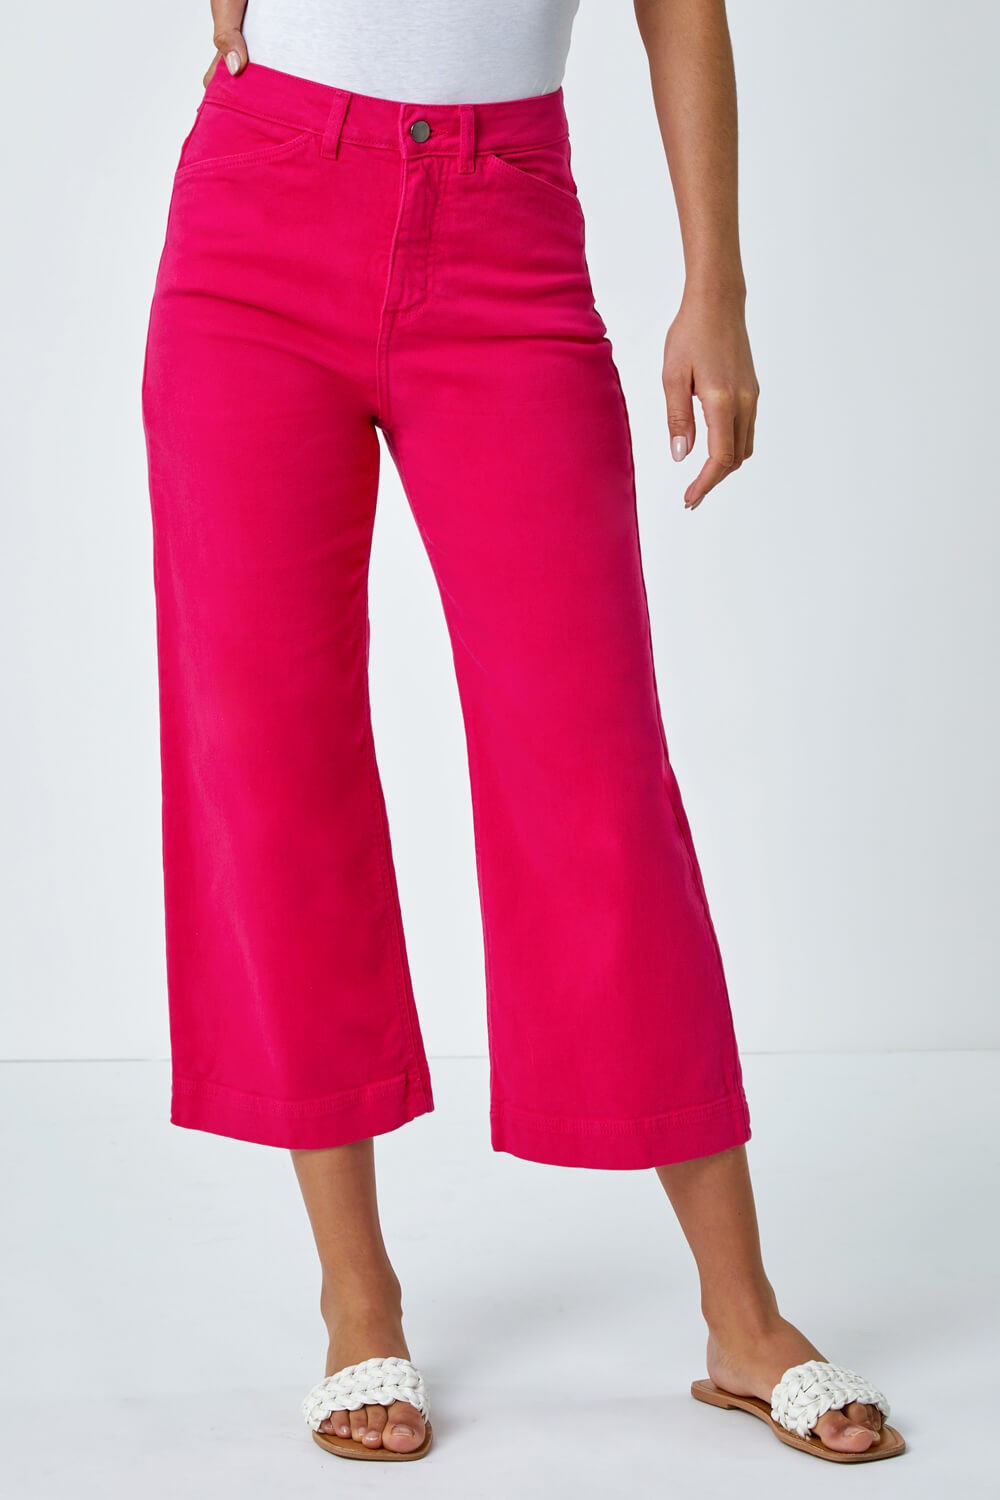 Hot Pink Cotton Denim Stretch Culottes, Image 4 of 5